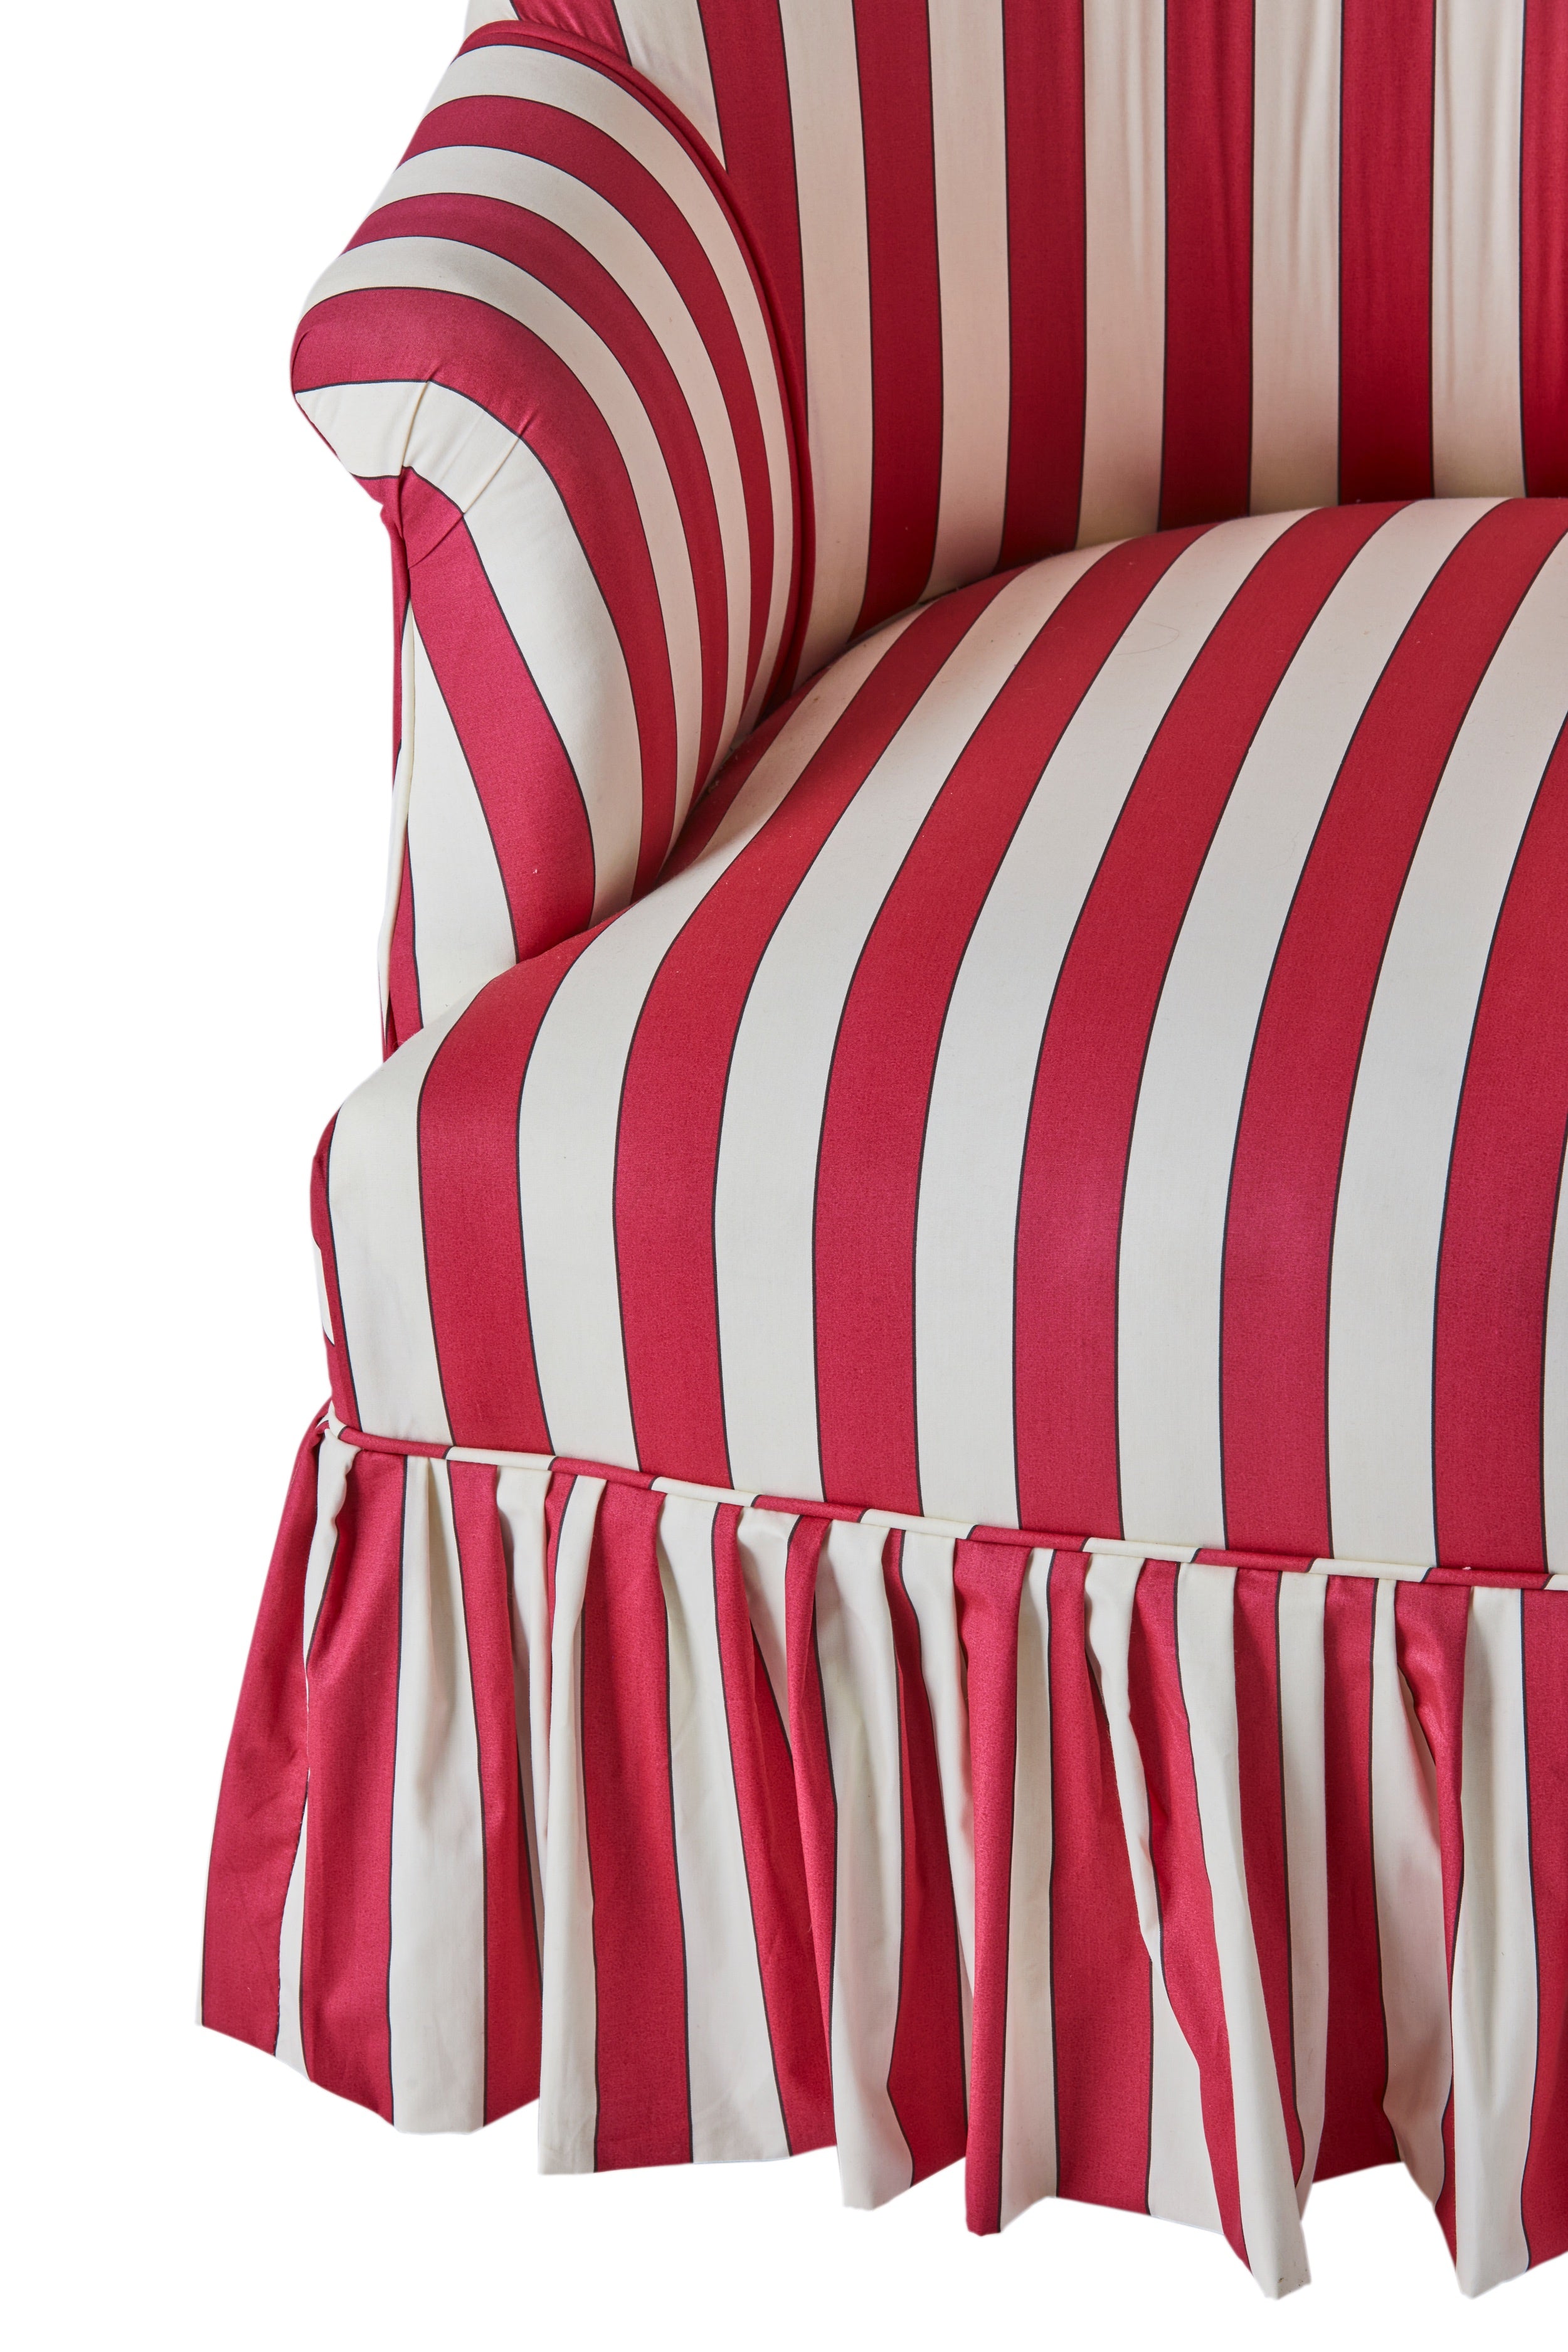 A Victorian Tub Armchair in Flora Soames Plain Stripe Cotton, Pair Available.